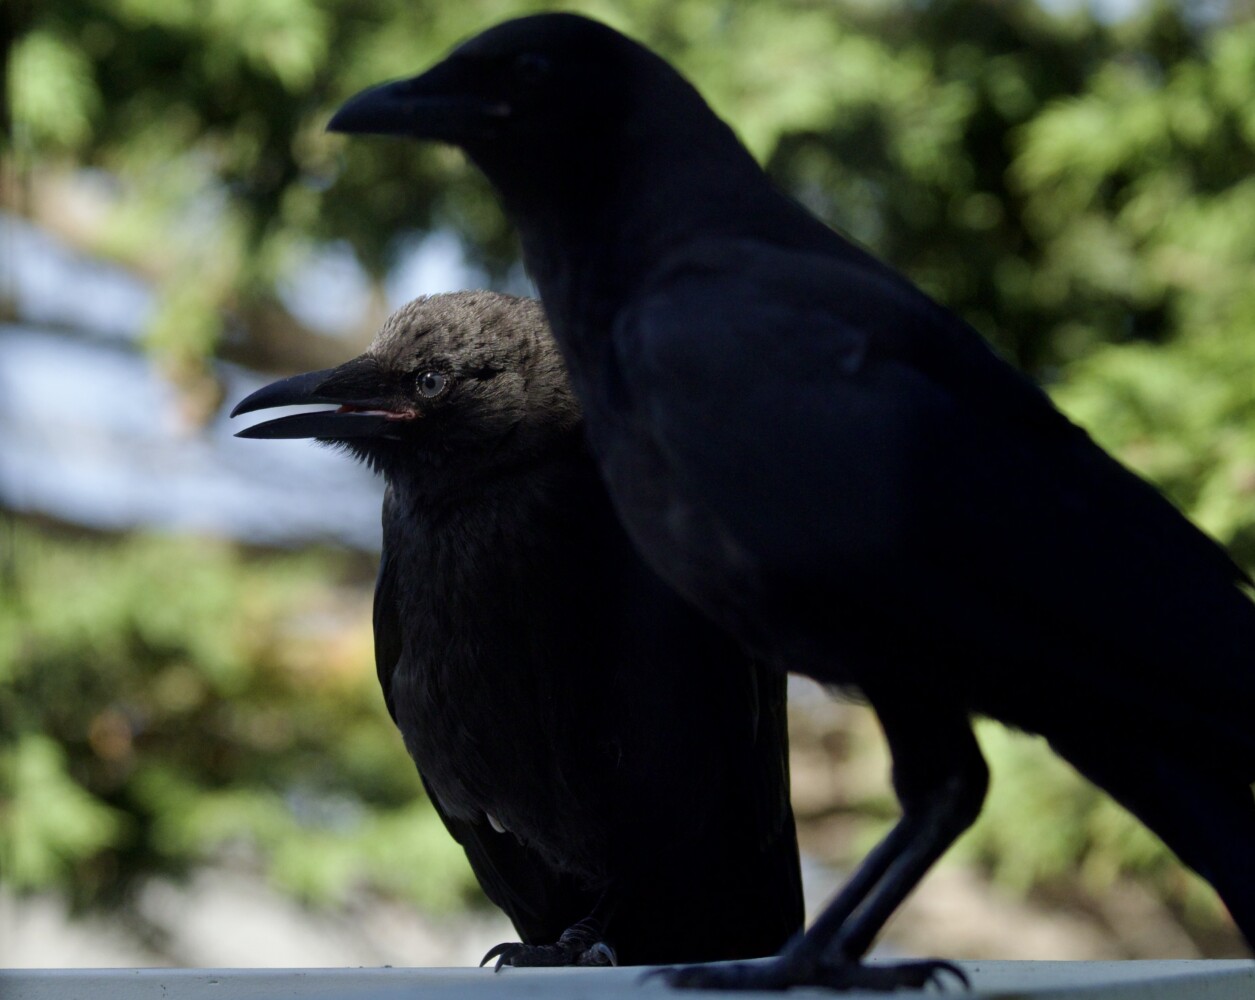 Juvenile Crow with Parent